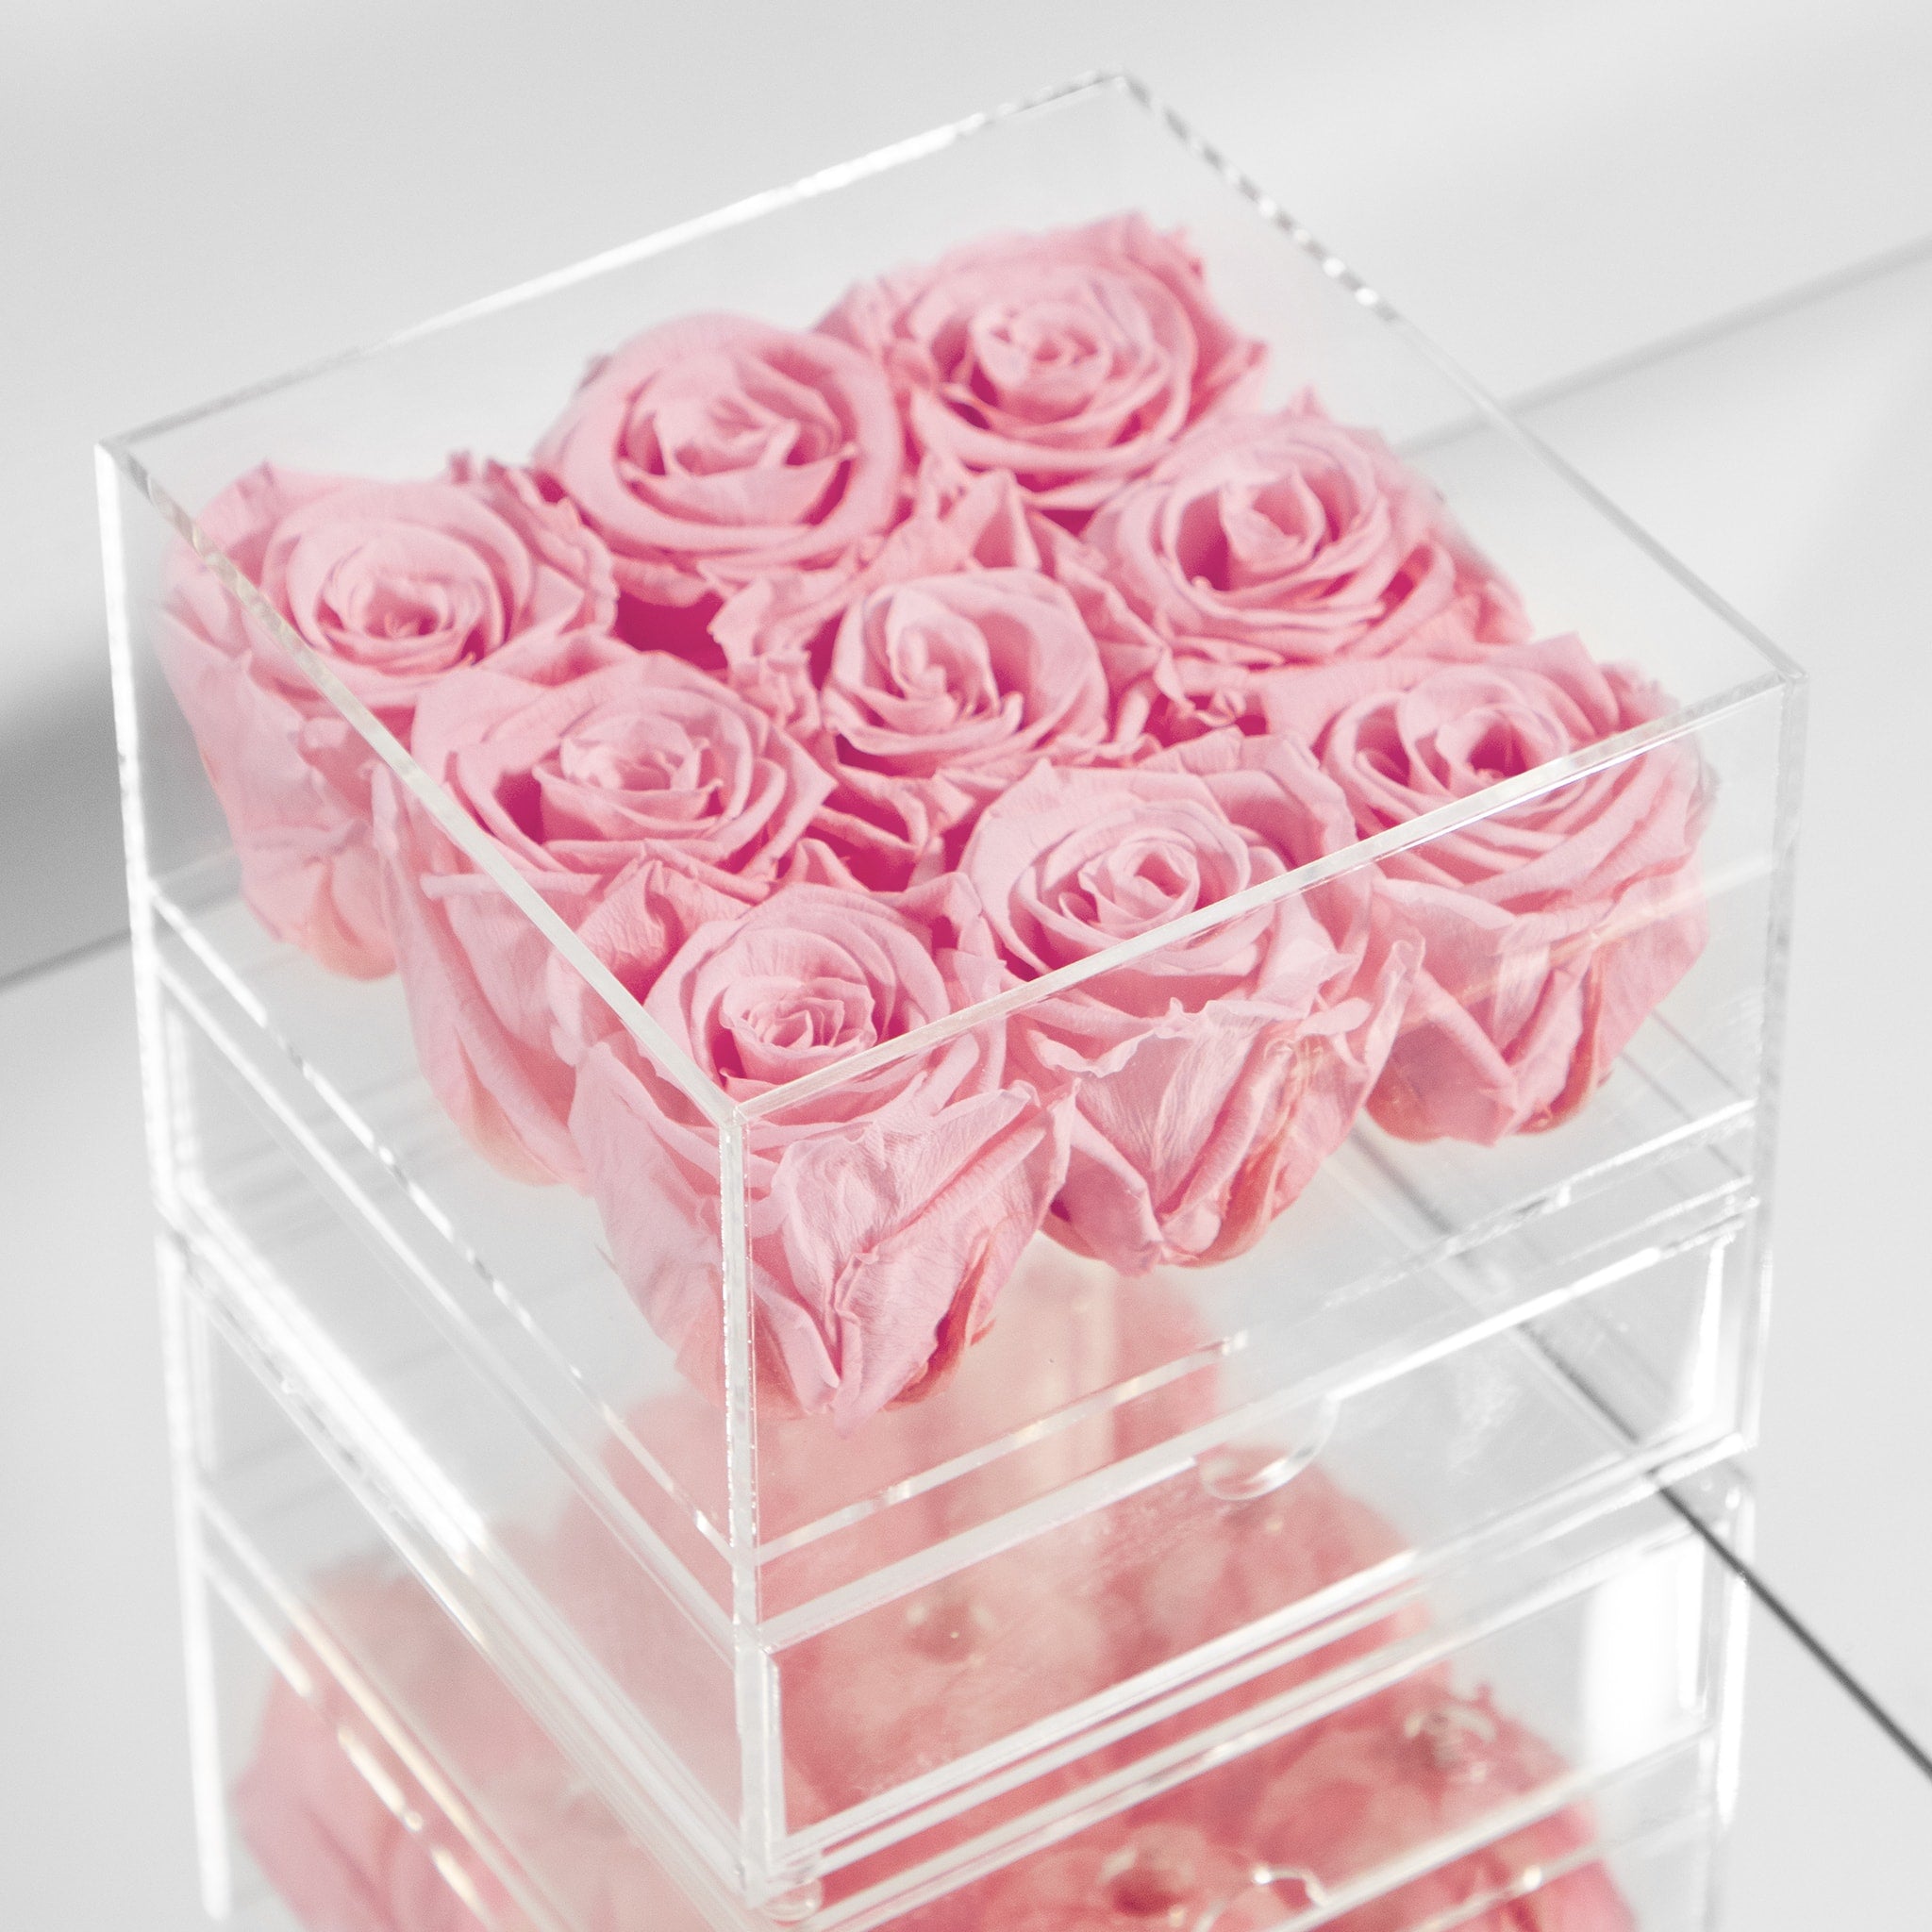 Tender light pink Roses denoting beauty love, and romance. 